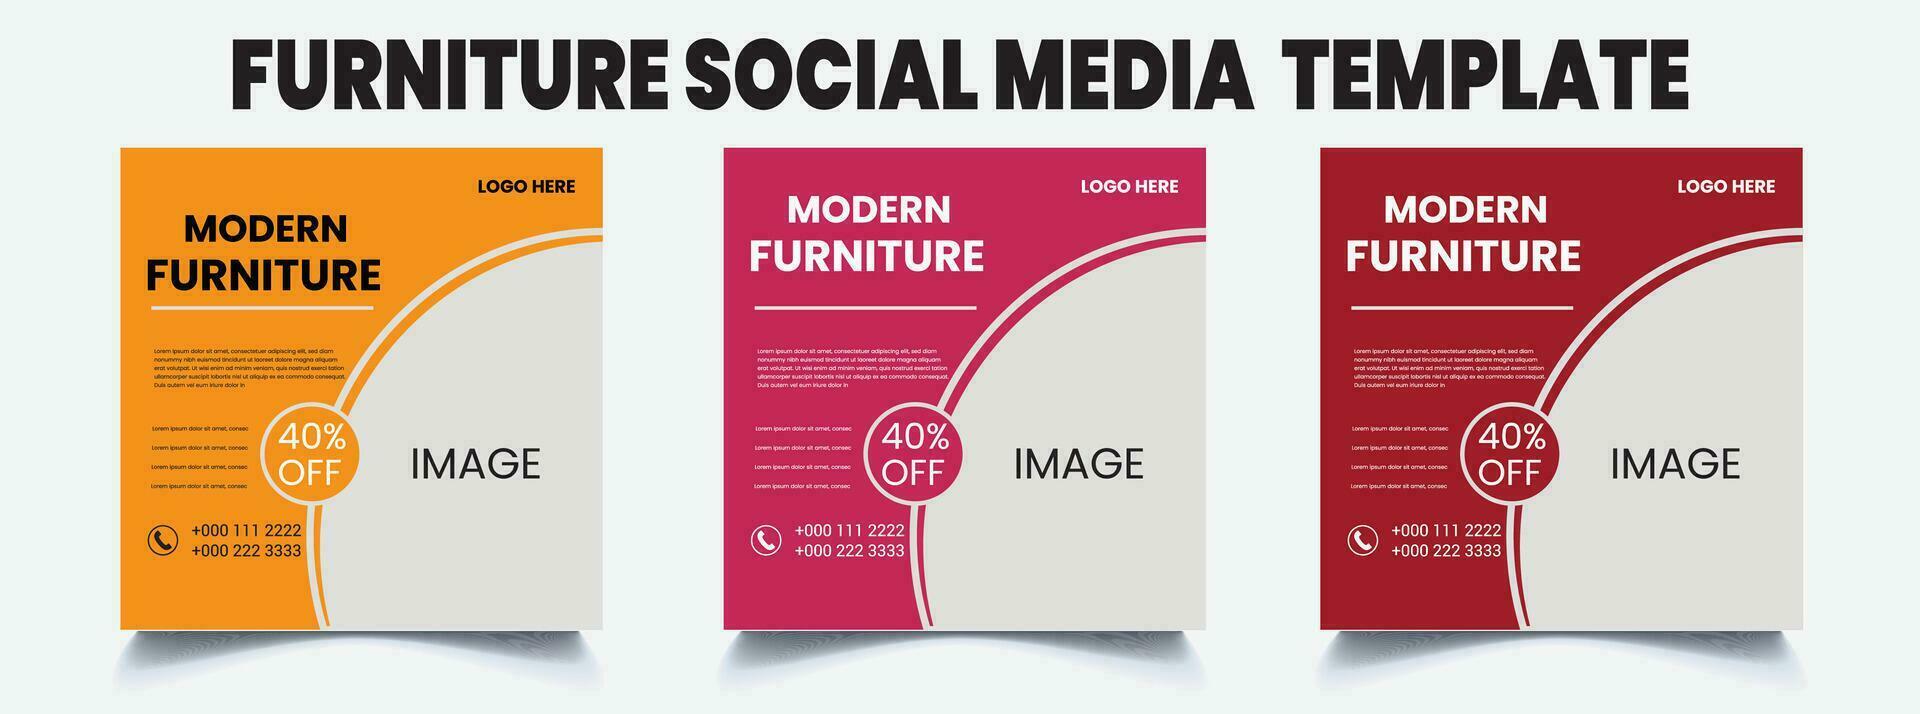 Furniture social media template Design. vector